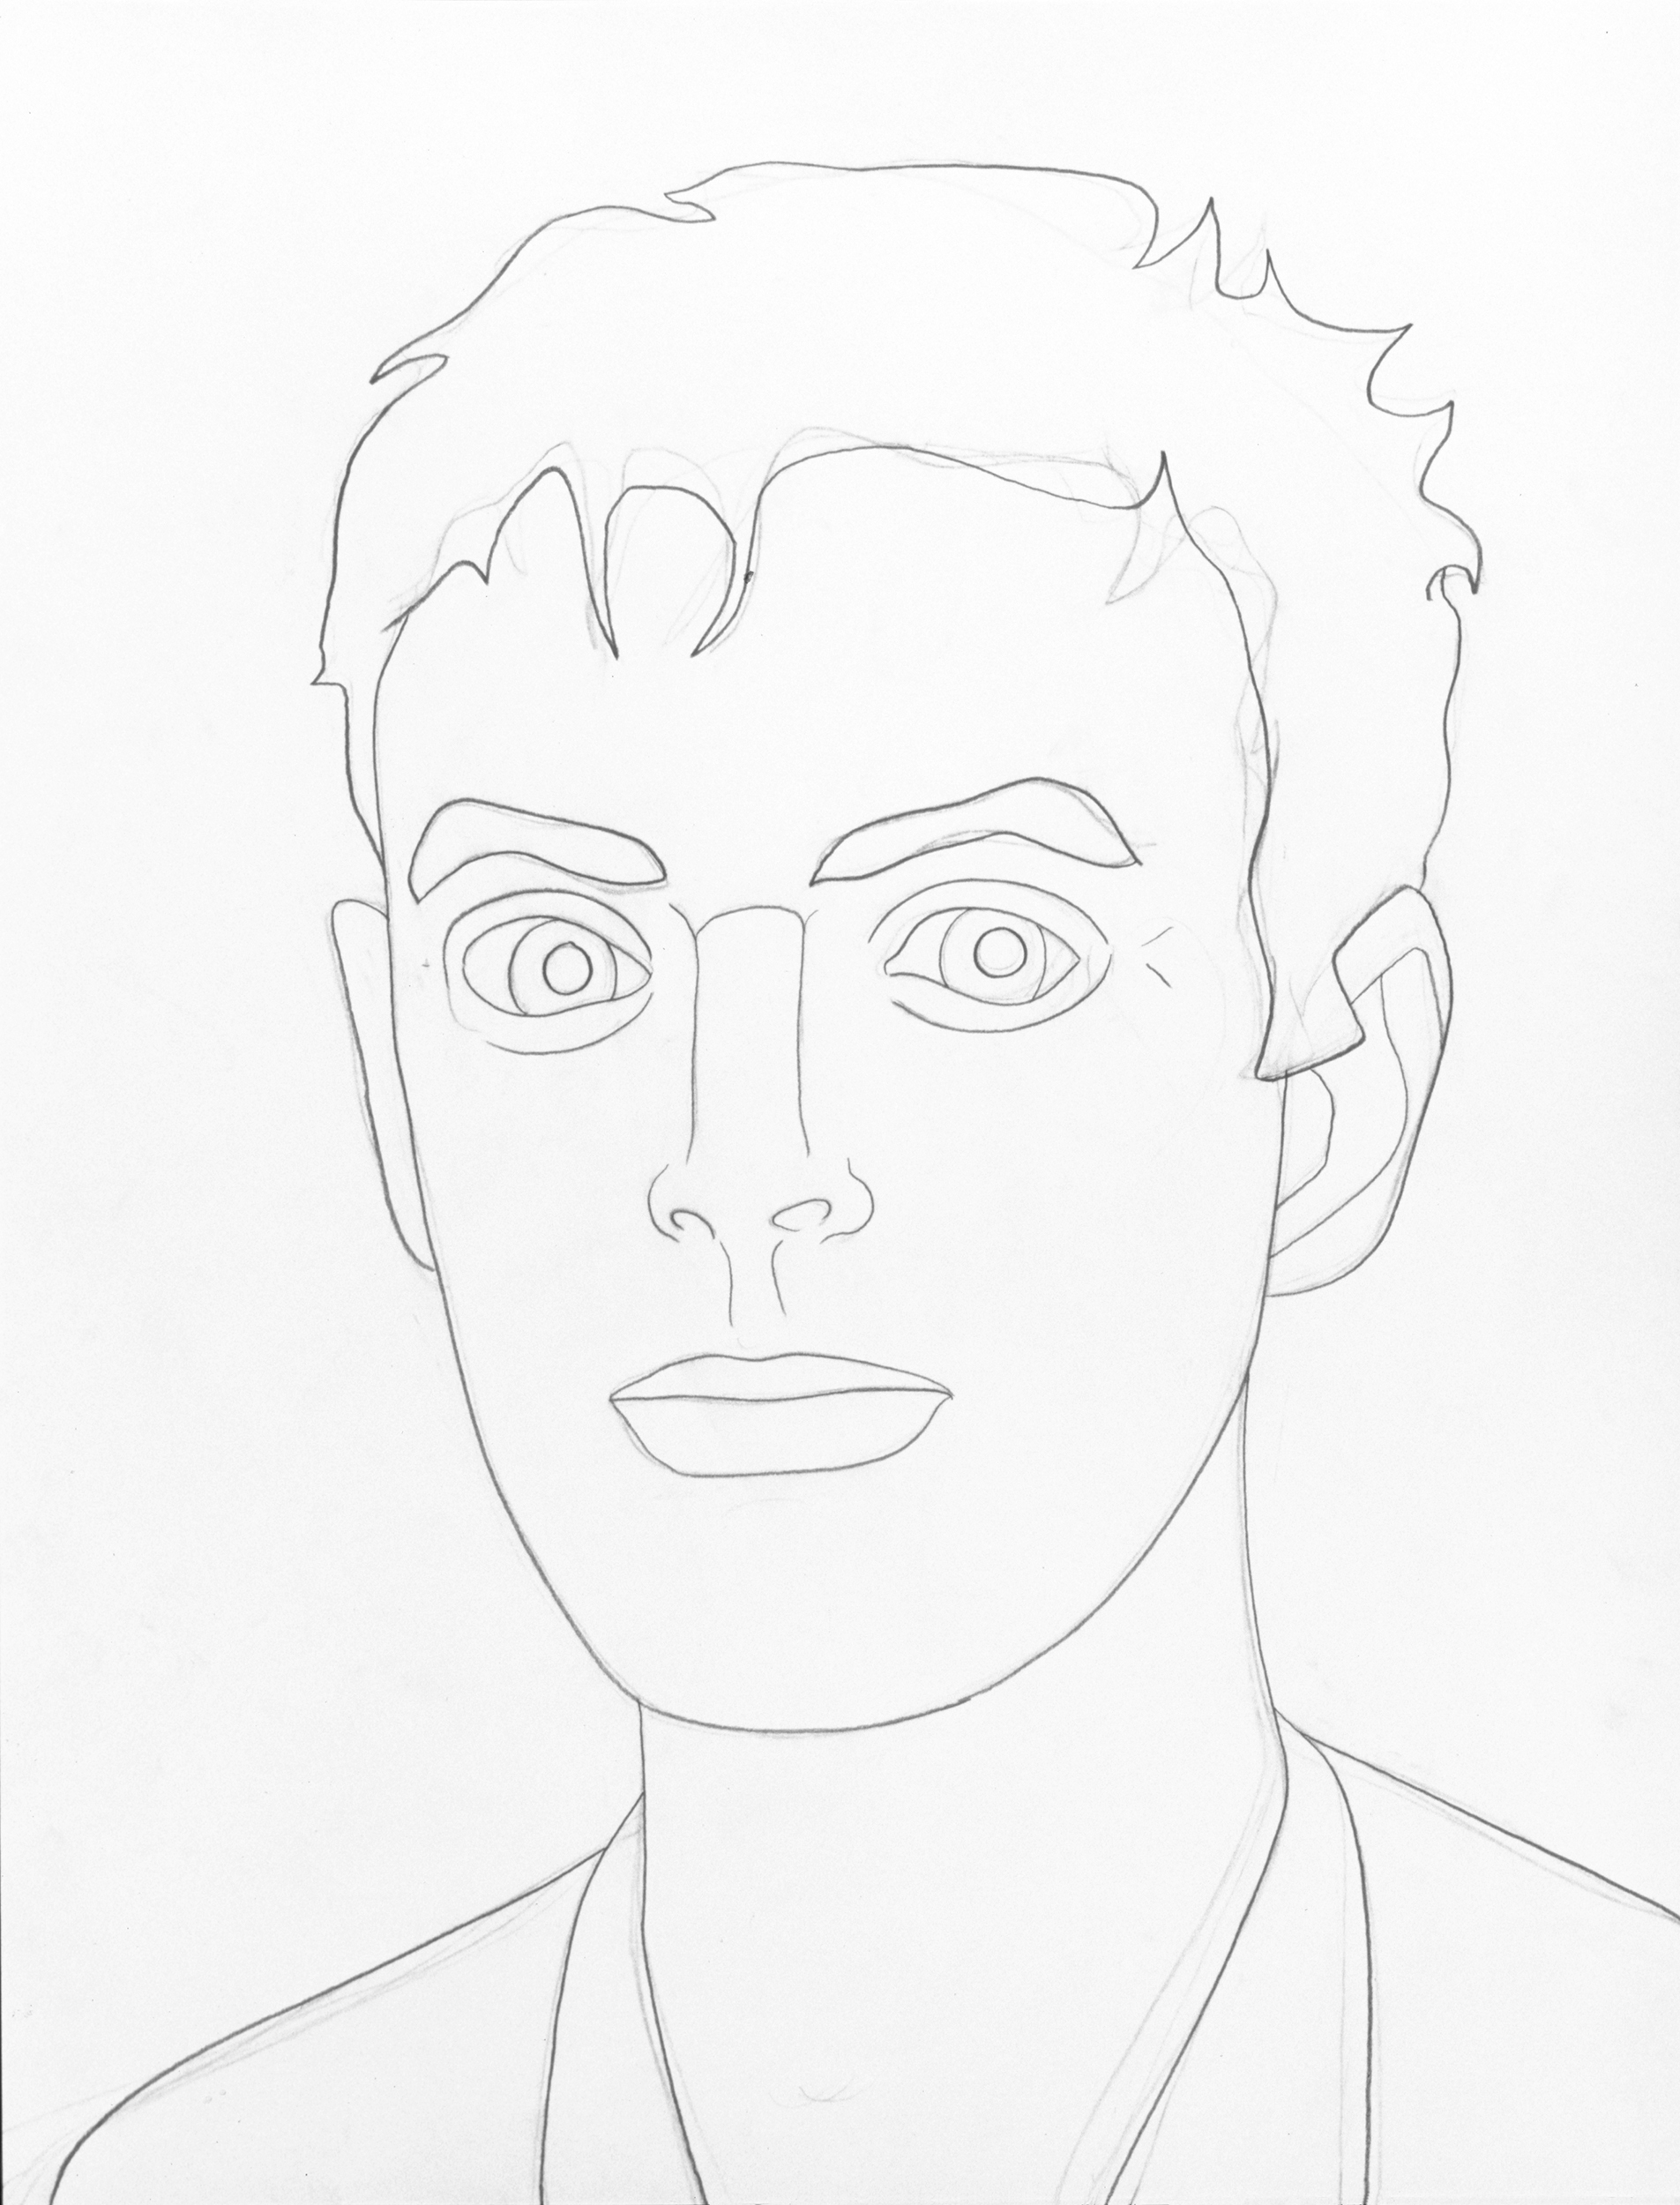 Self-portrait, drawing by Wouter van Riessen